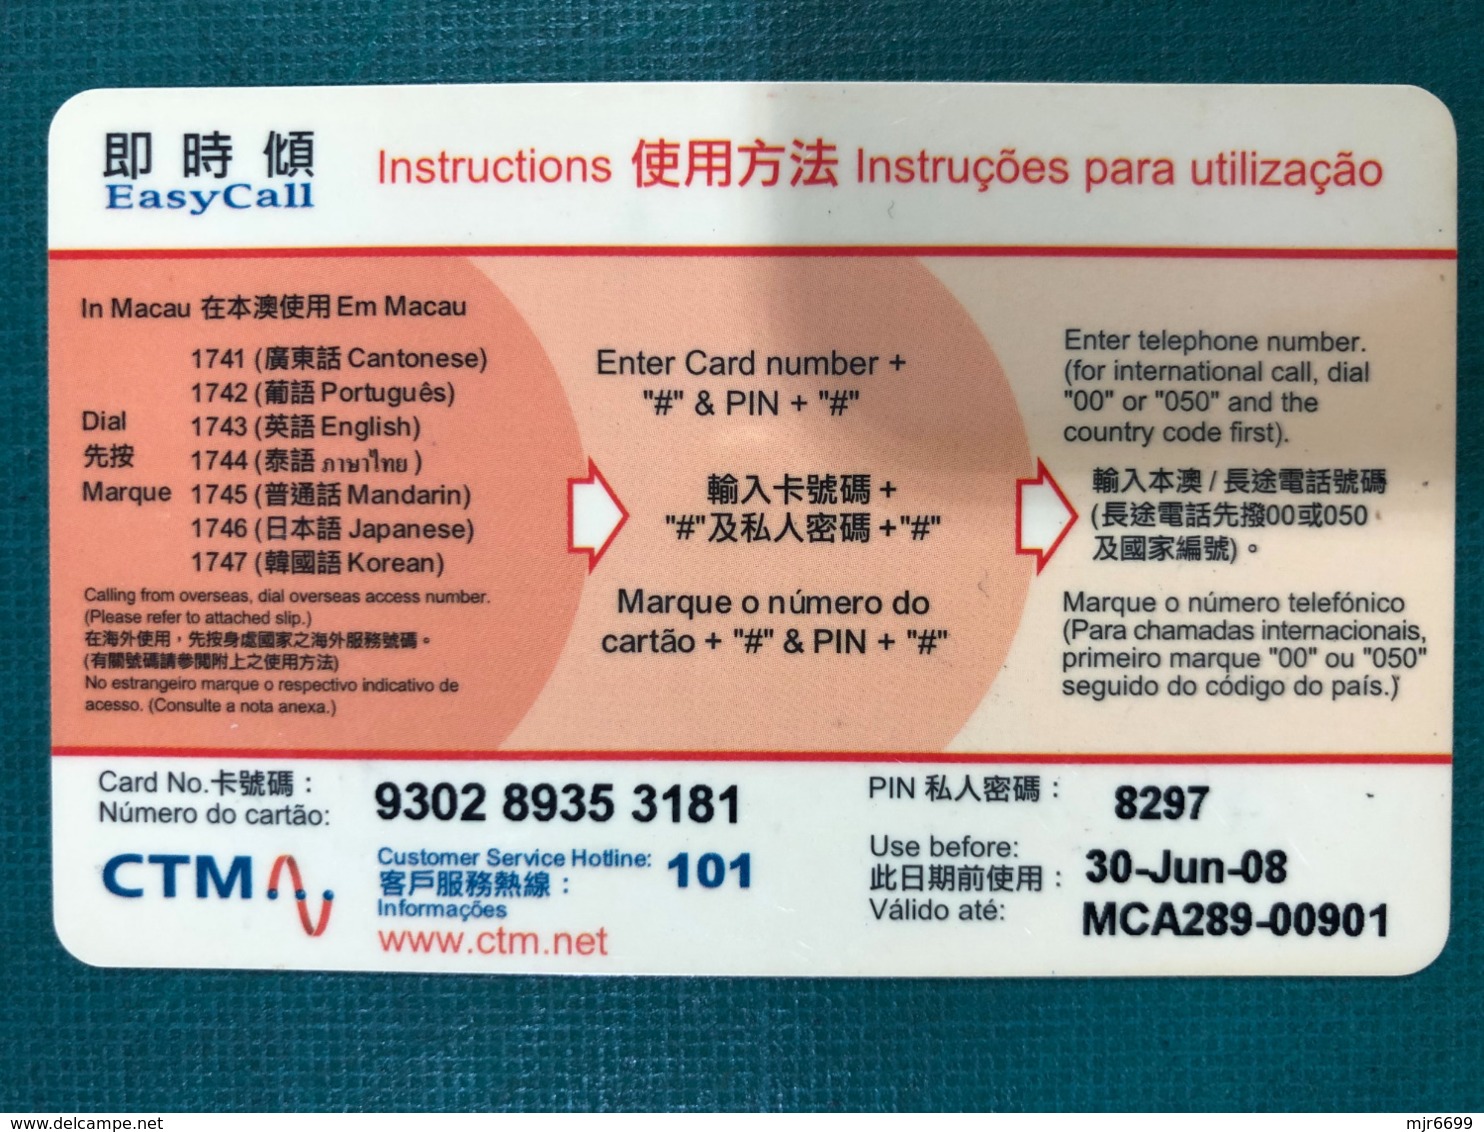 MACAU-CTM 2008 EASY CALL TELEPHONE CARD, (AIR MACAU SPONSER) - Macau